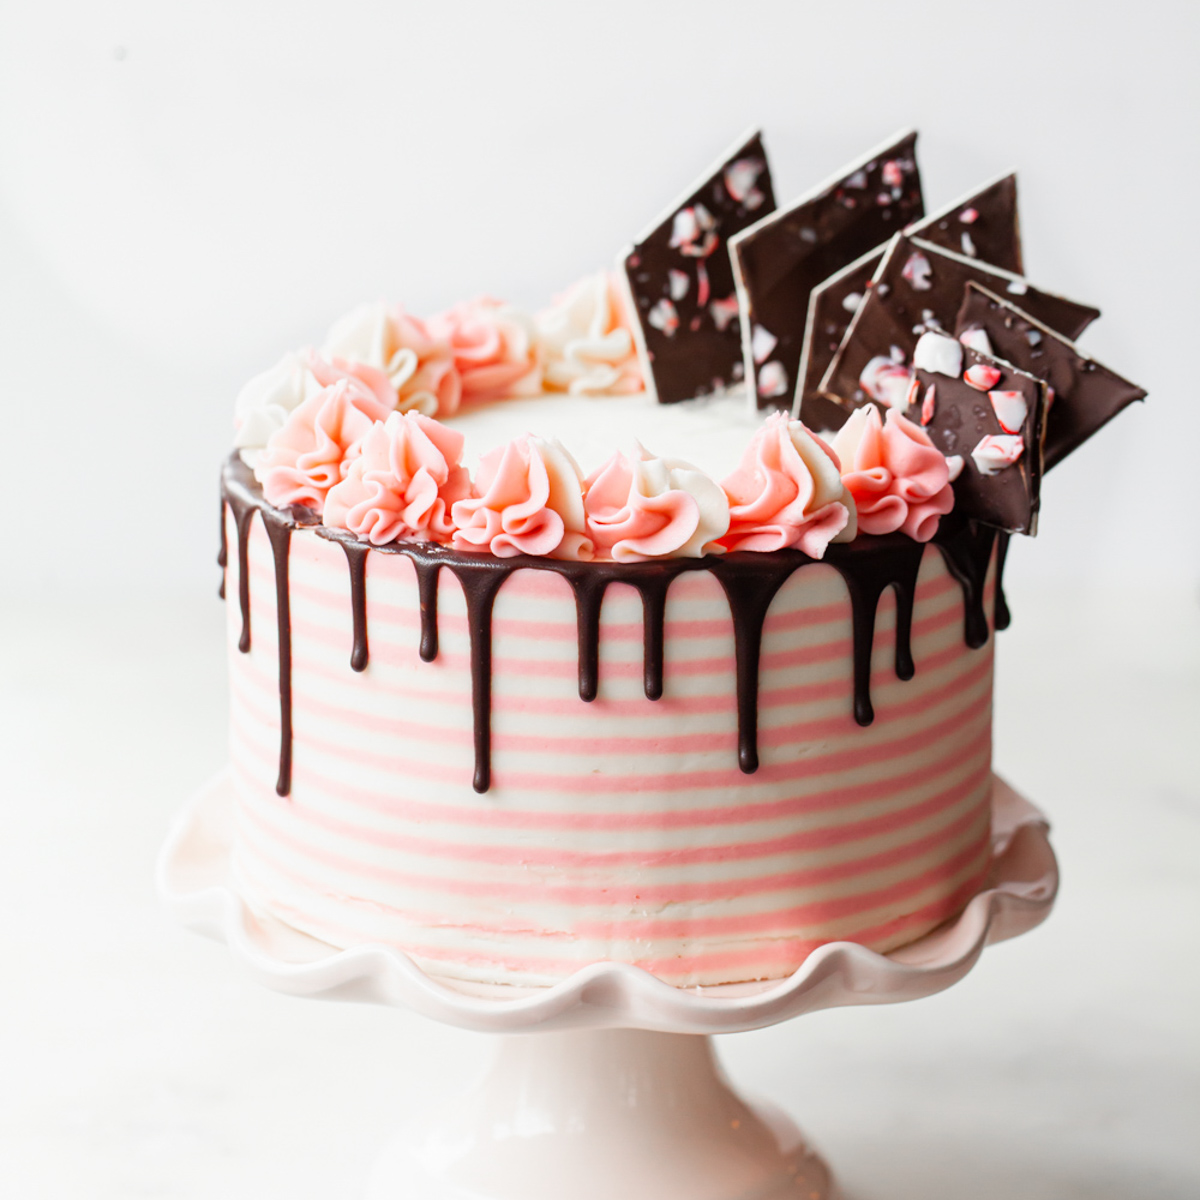 Candy Bar Cheesecake Cake Recipe - Something Swanky